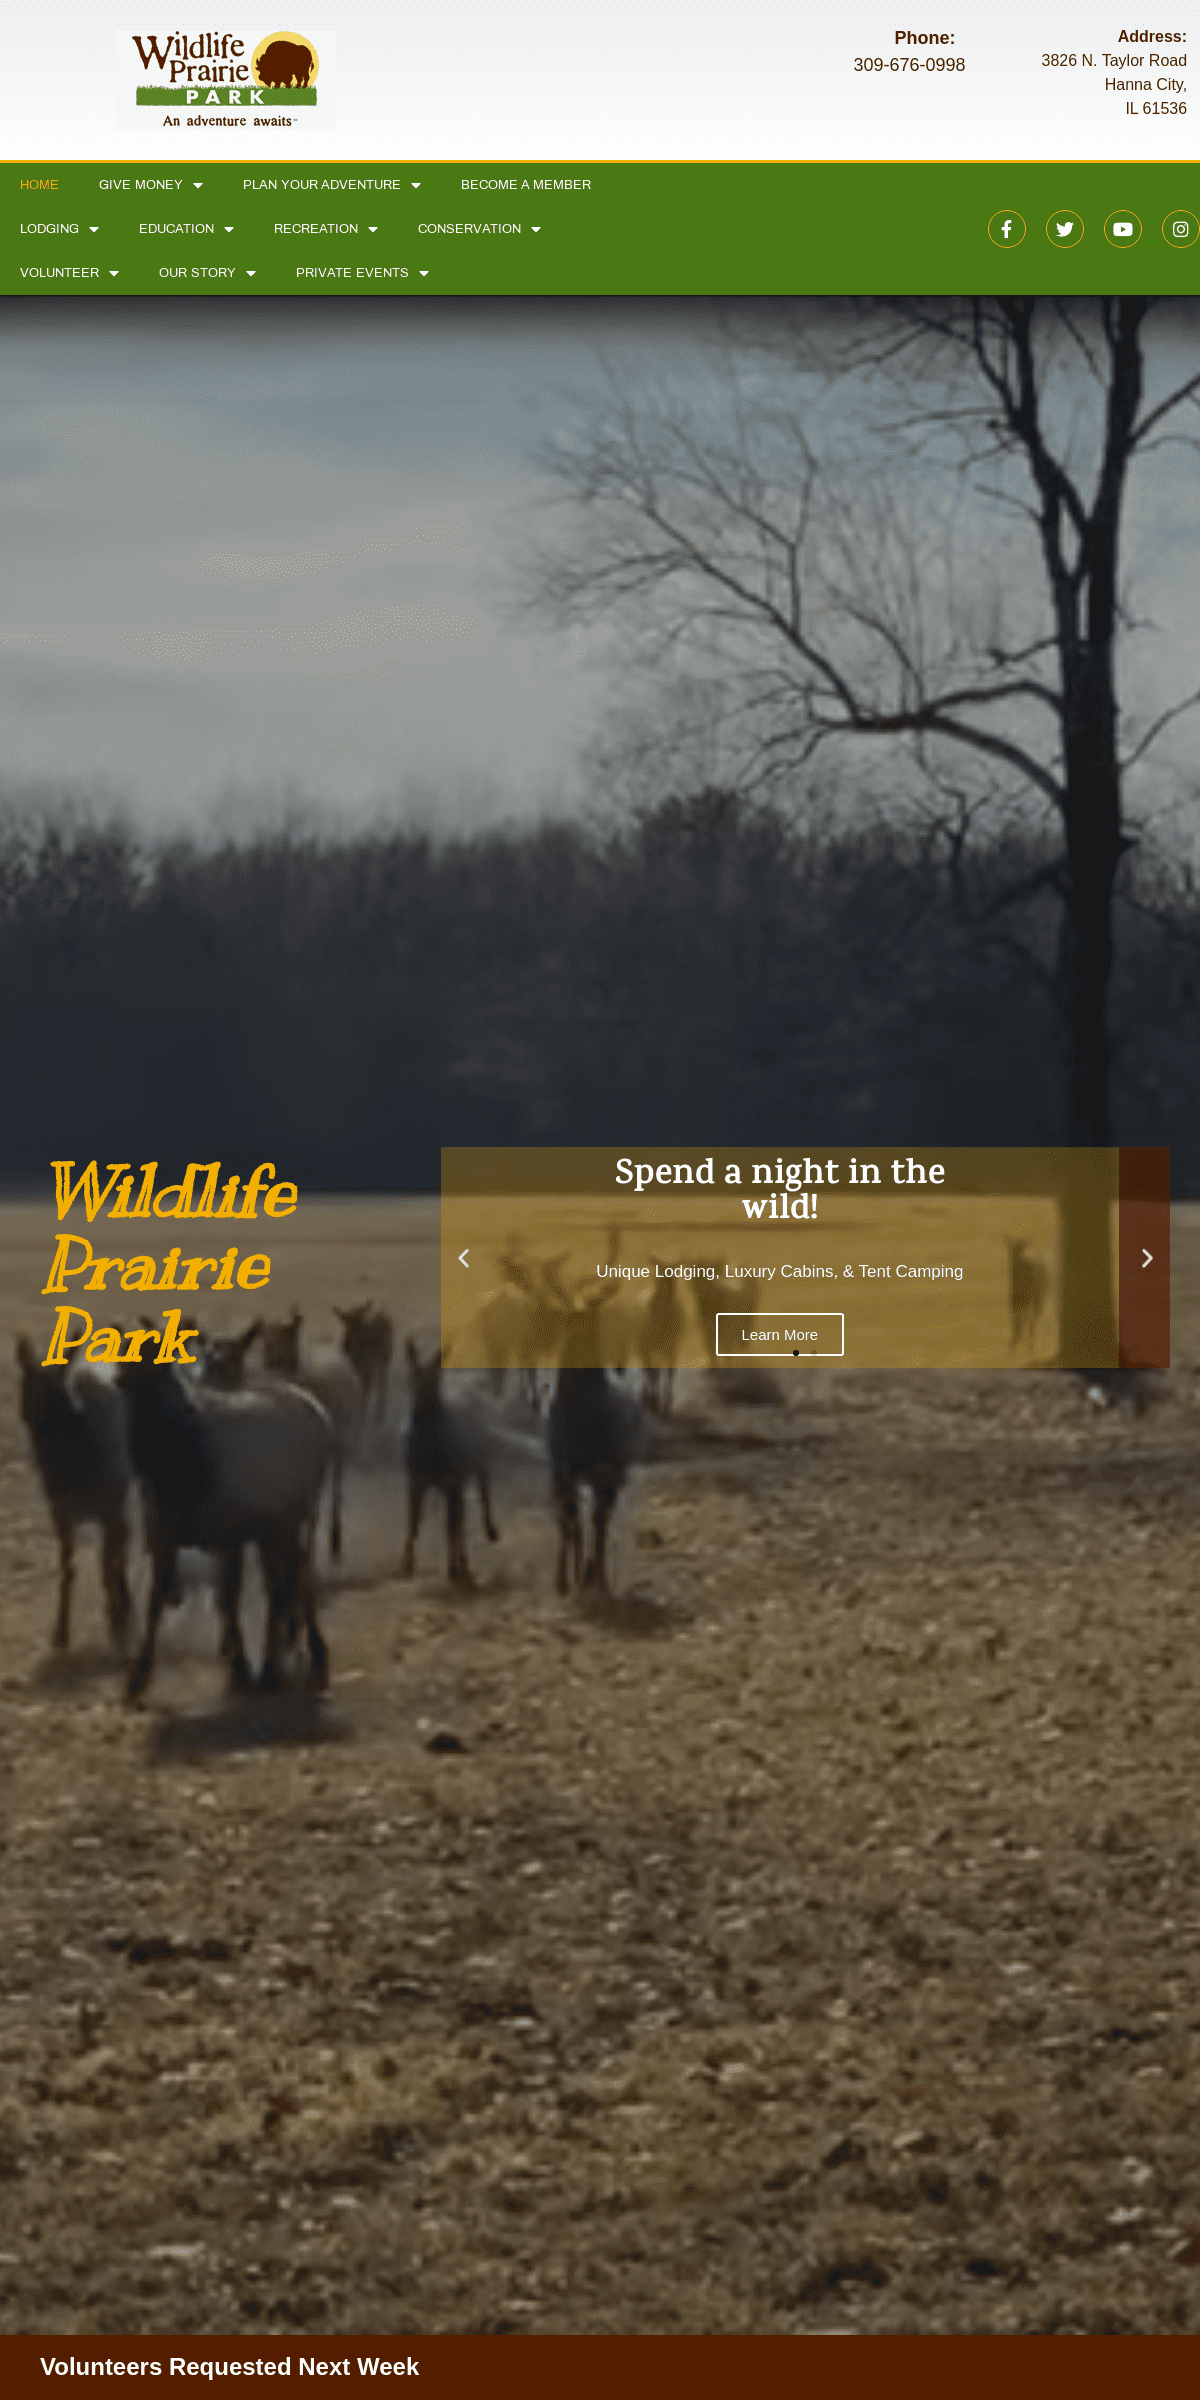 Home - Wildlife Prairie Park